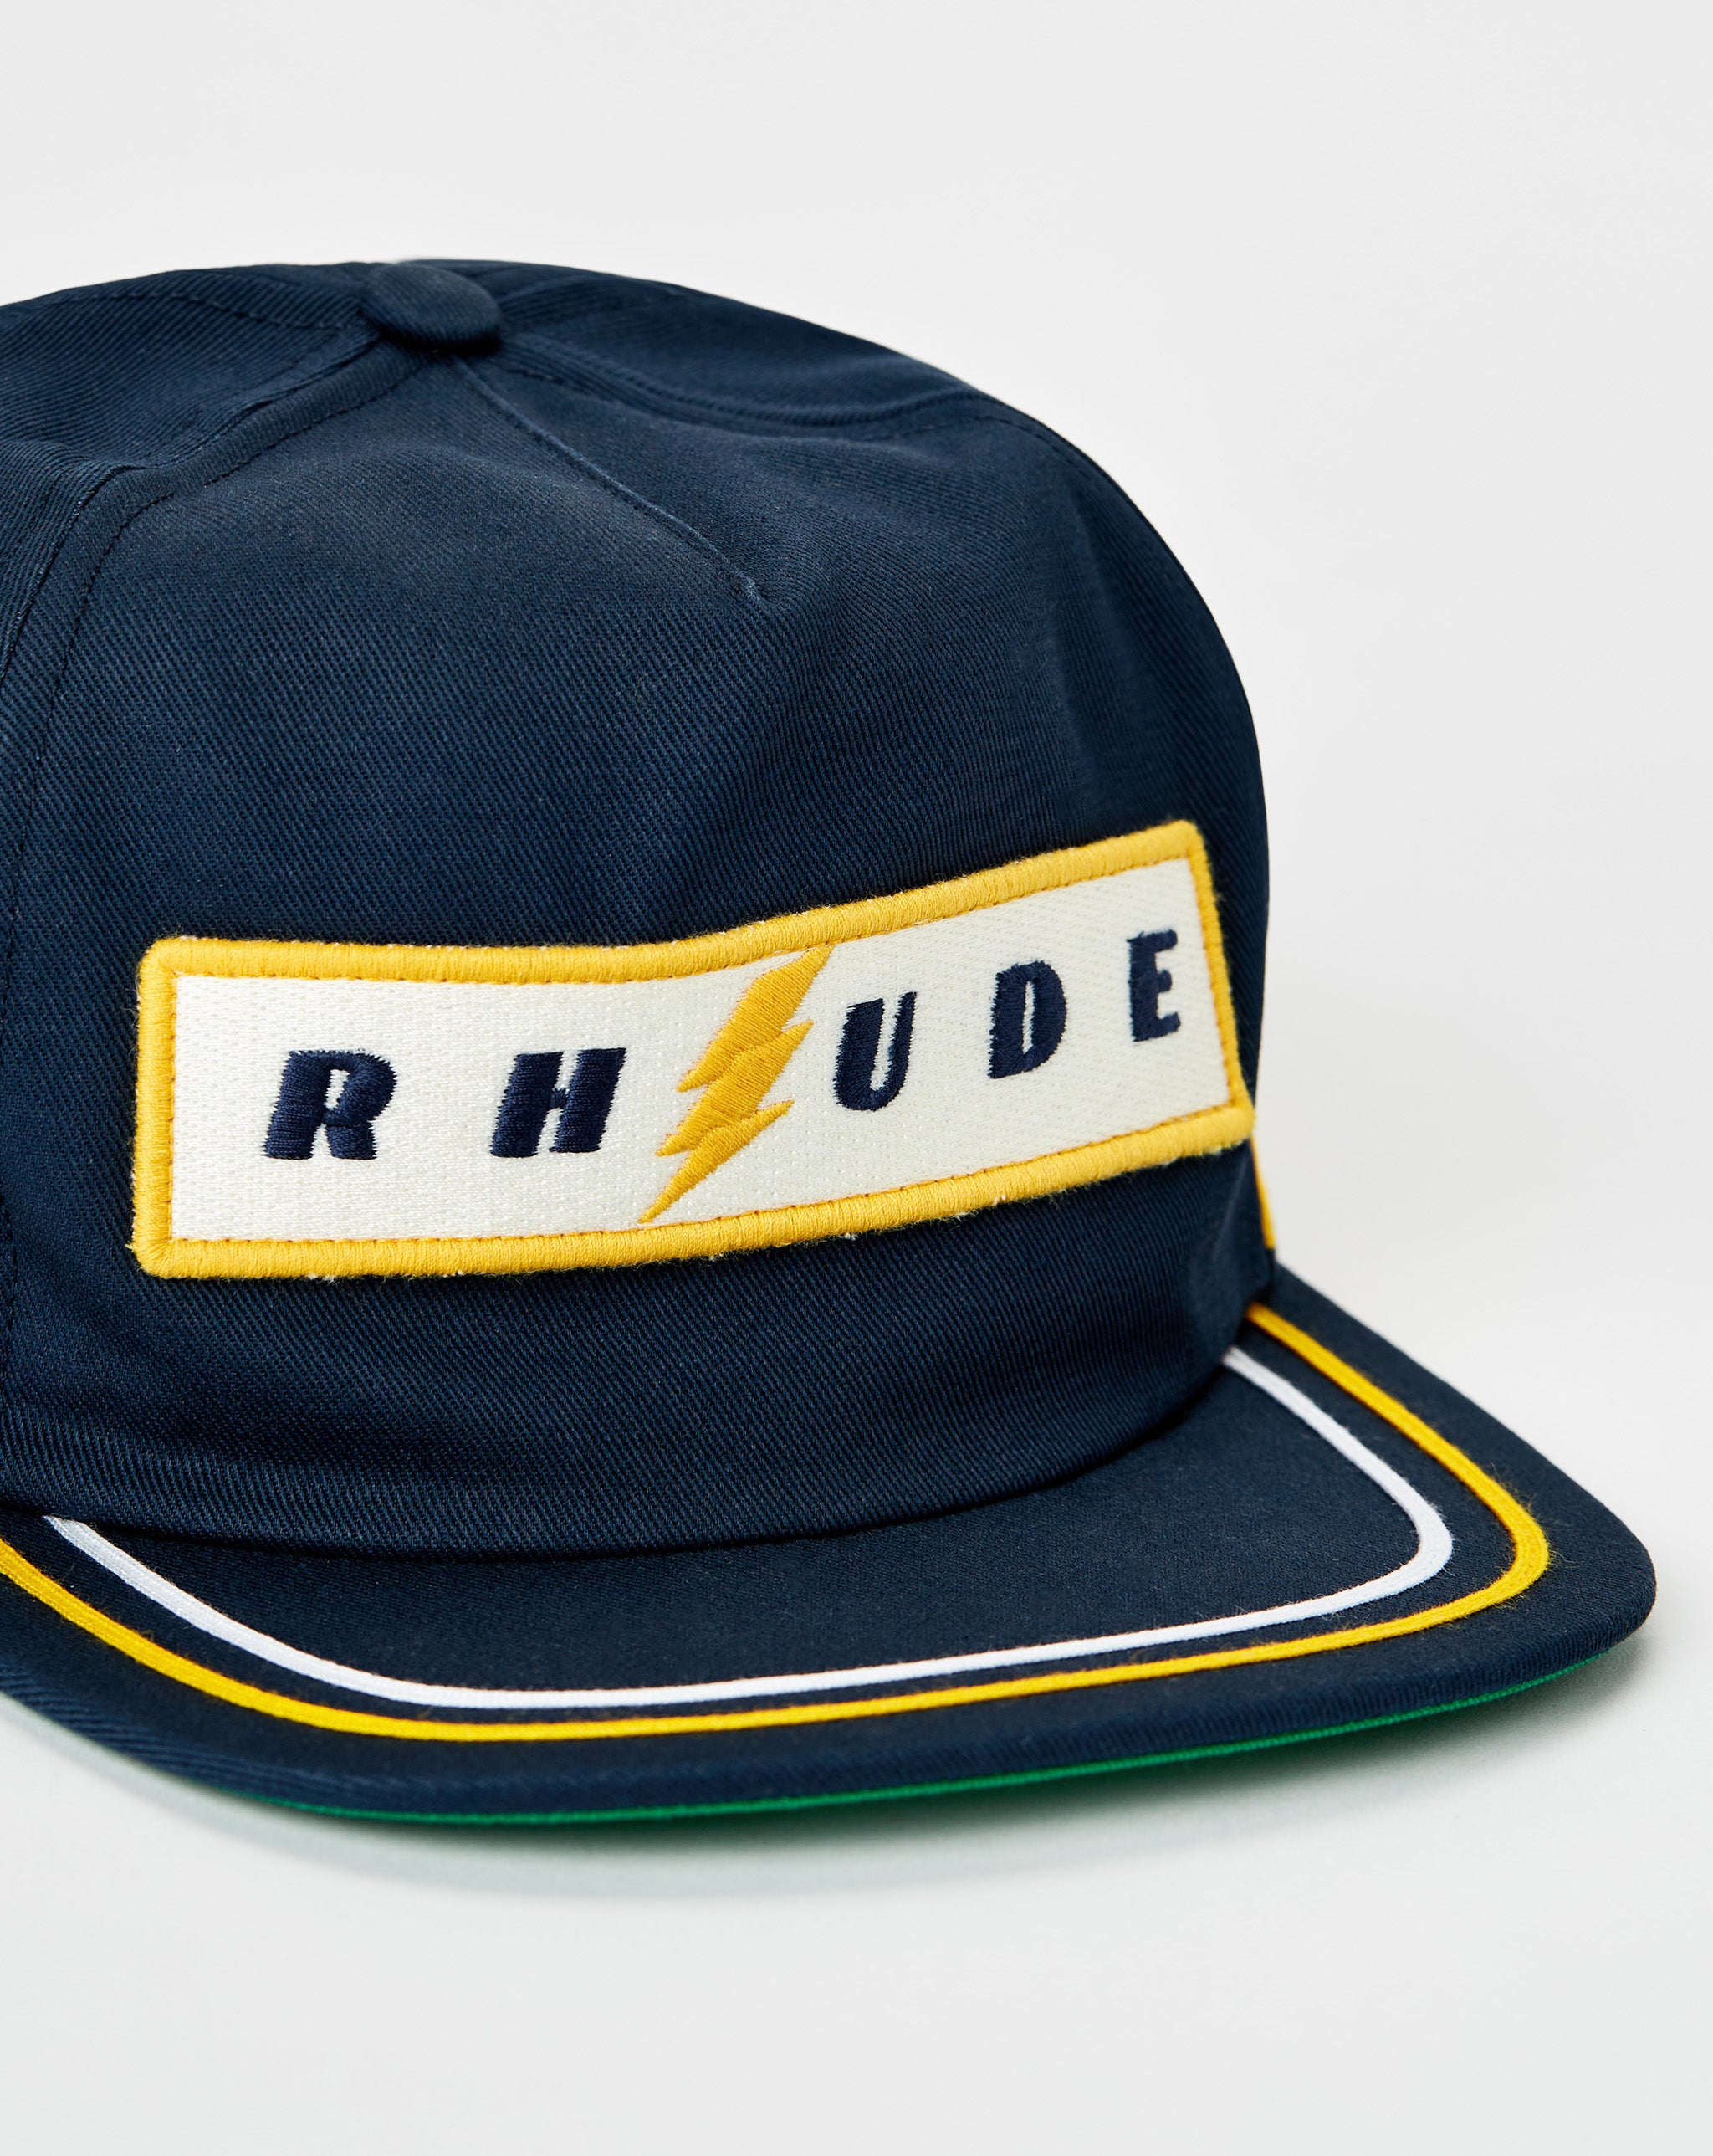 Rhude Structured Hat 2  - XHIBITION